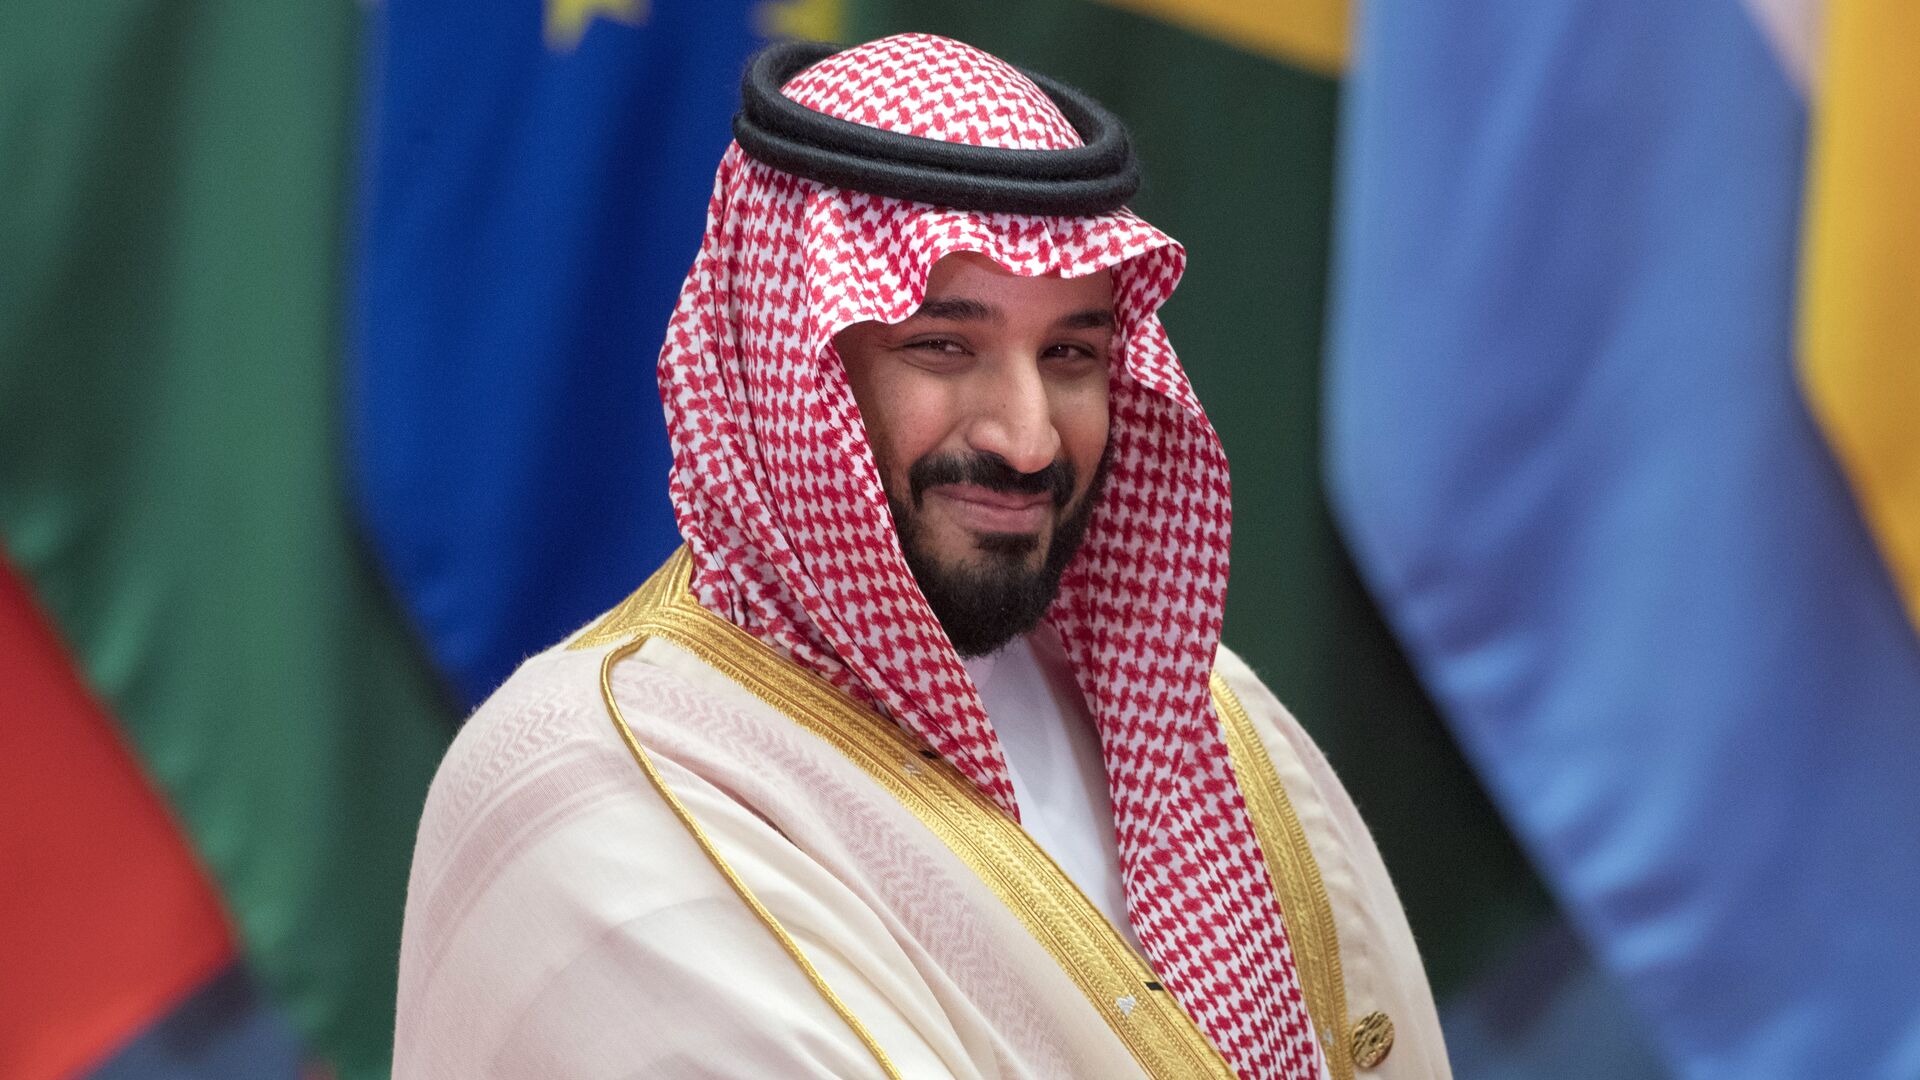 Crown Prince of Saudi Arabia Muhammad bin Salman Al Saud. File photo. - Sputnik International, 1920, 18.06.2022